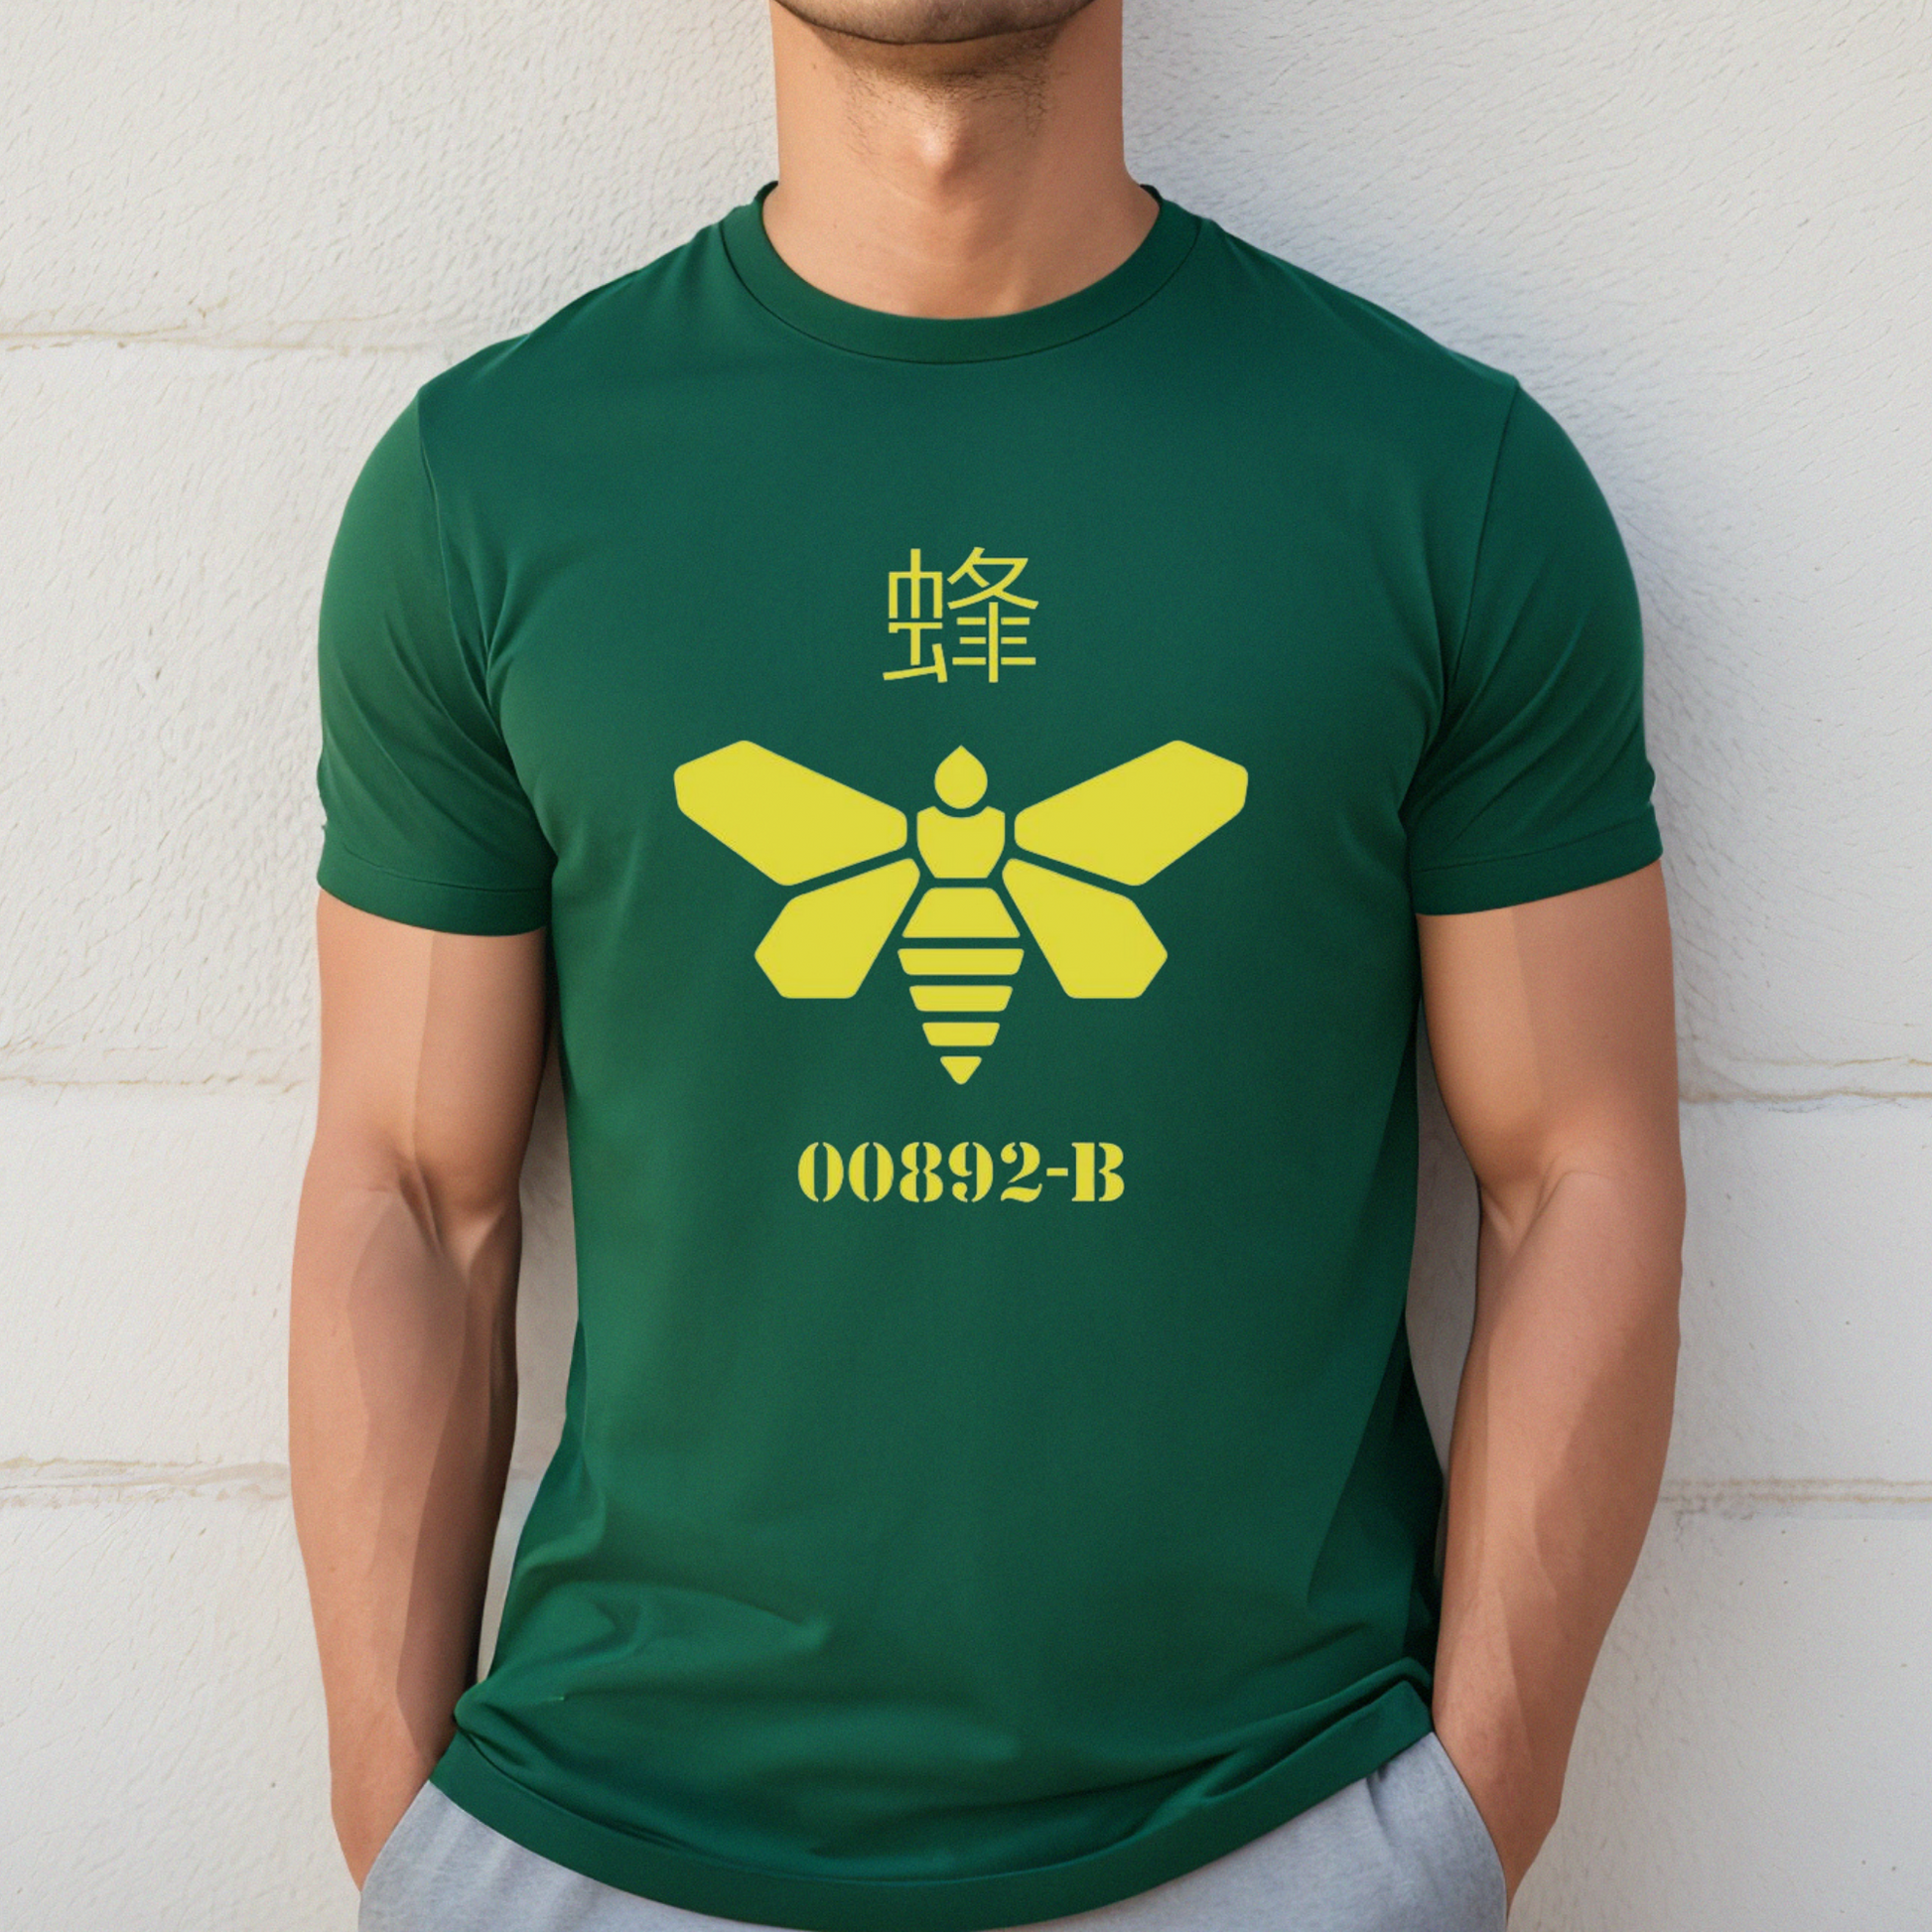 Golden Moth Chem Breaking Bad  Unisex T-Shirt Looper Tees